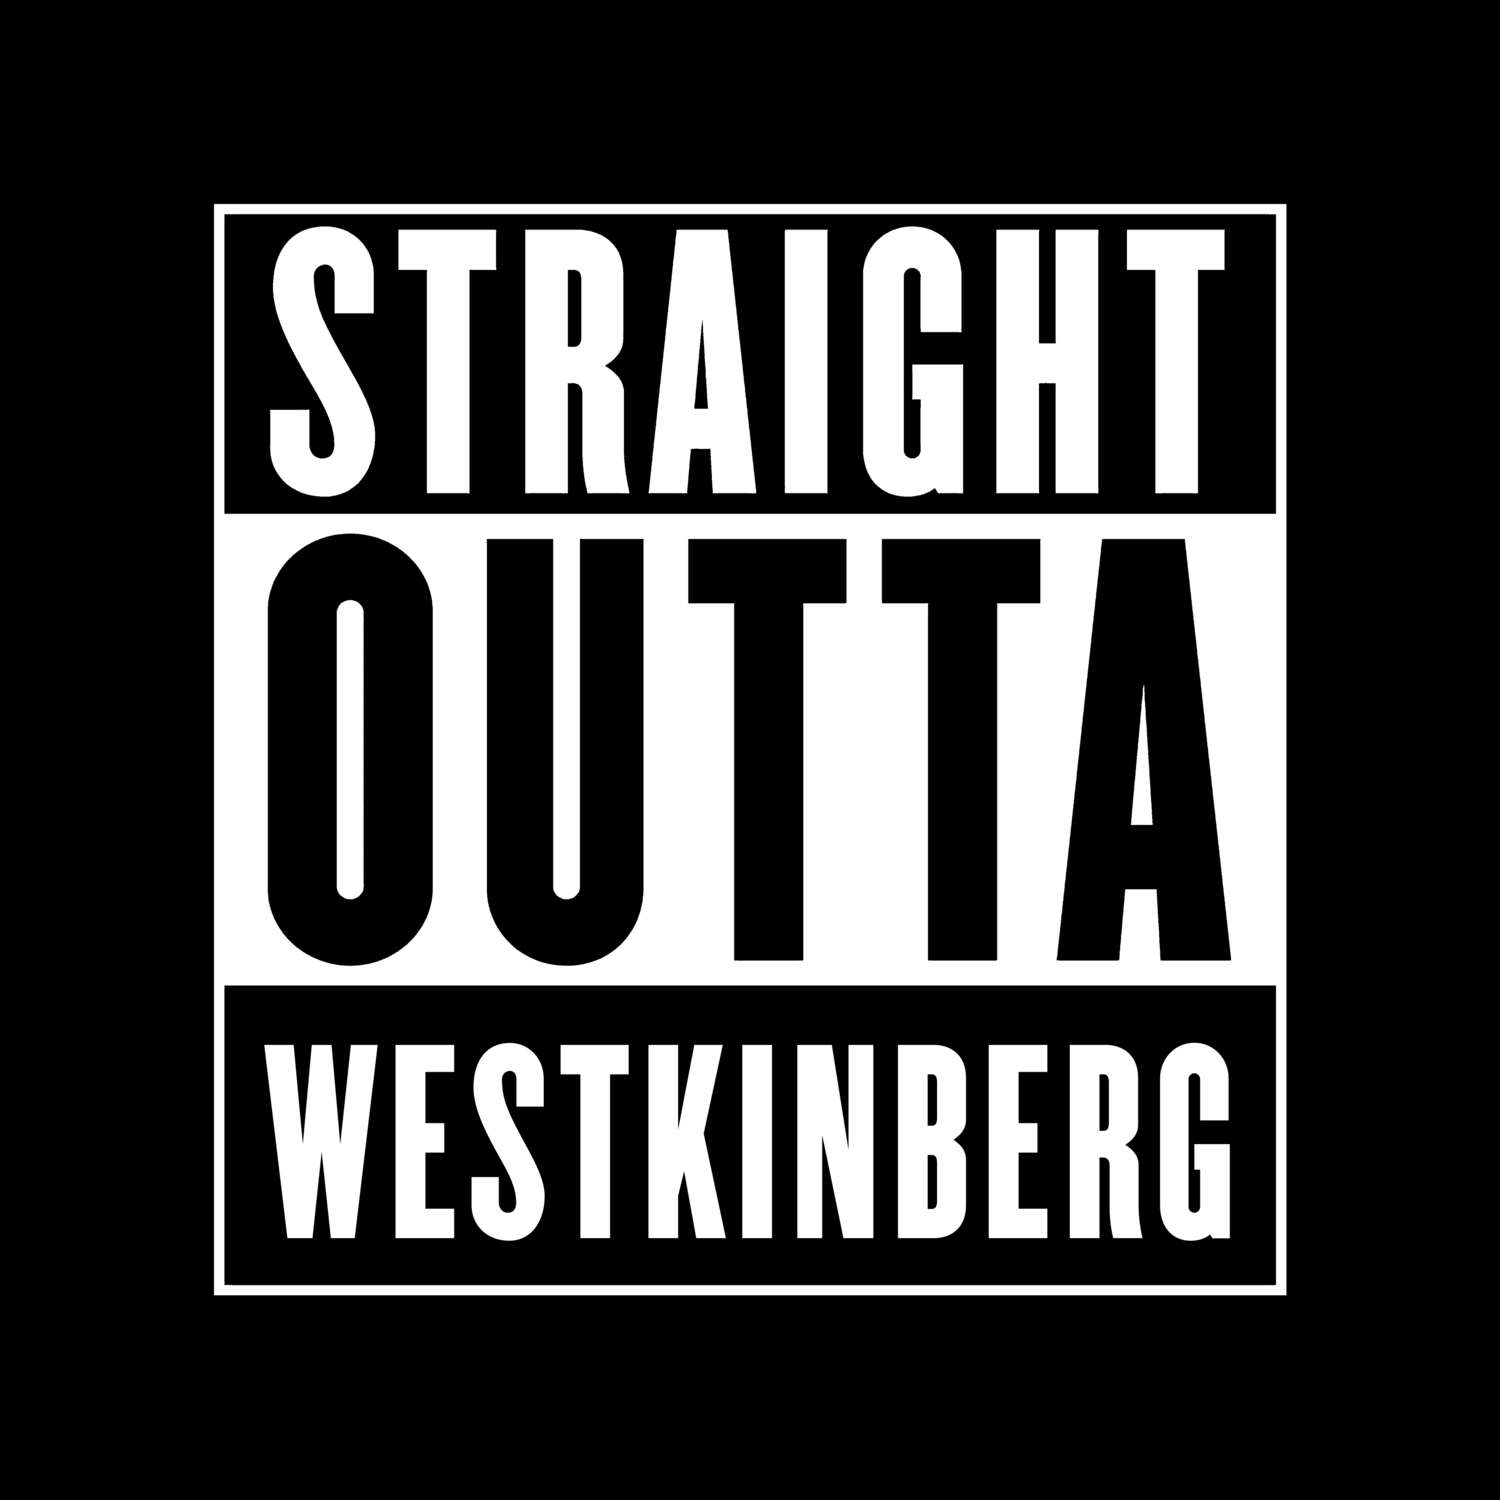 Westkinberg T-Shirt »Straight Outta«